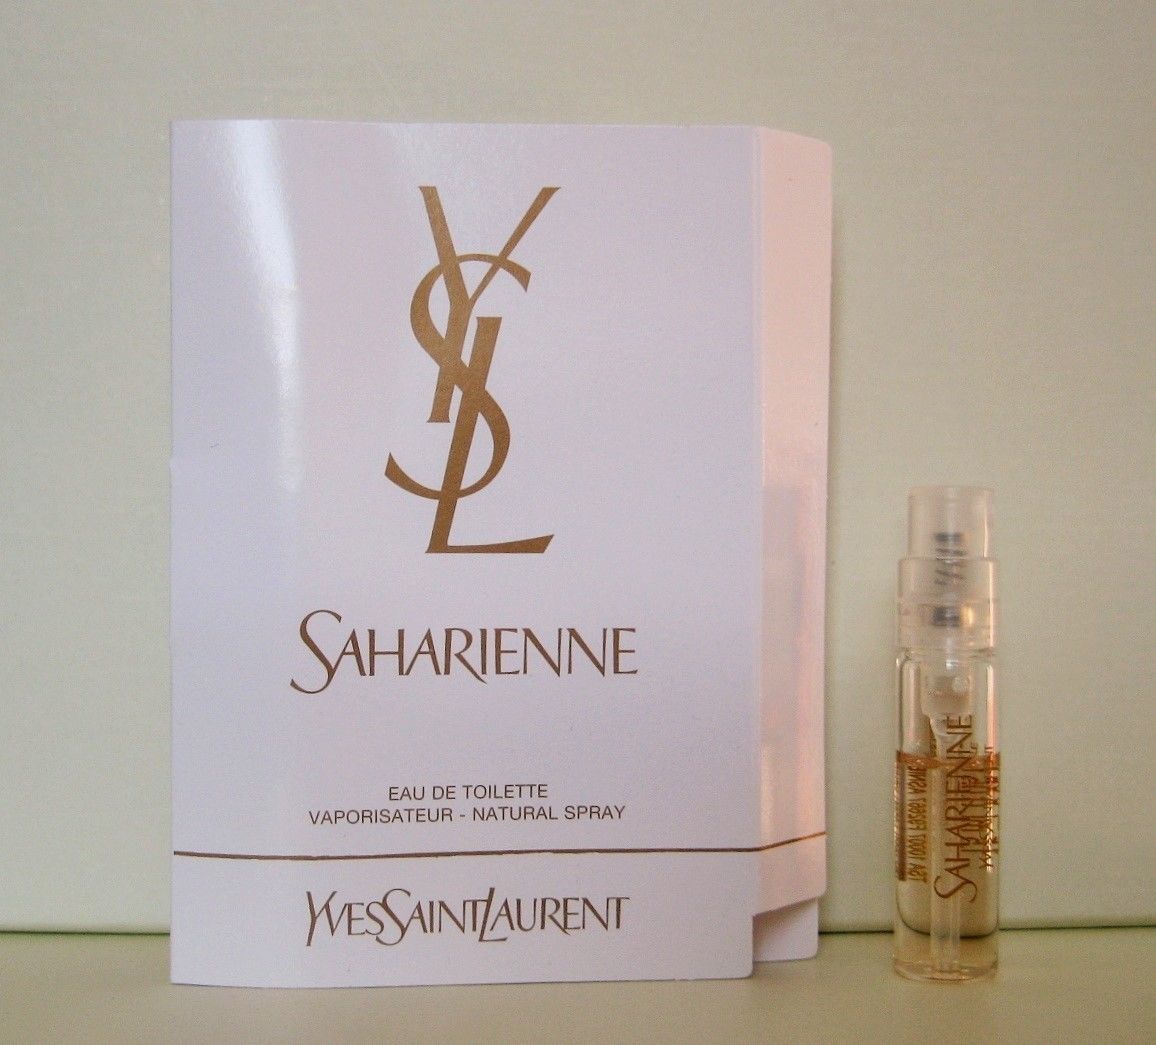 YSL-Saharienne-samples